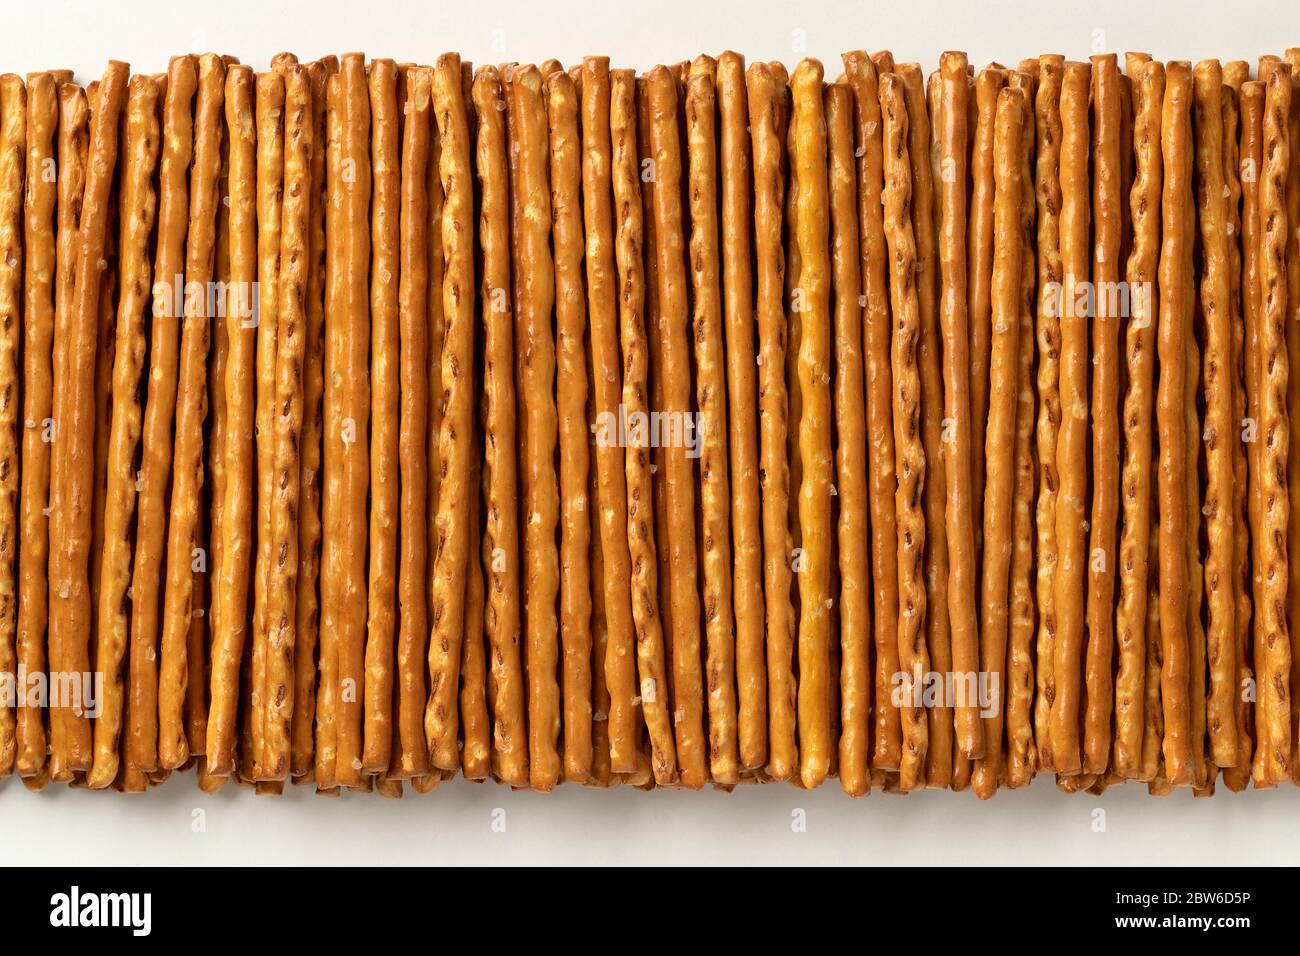 Crunchy salted pretzel sticks close up in a row Stock Photo